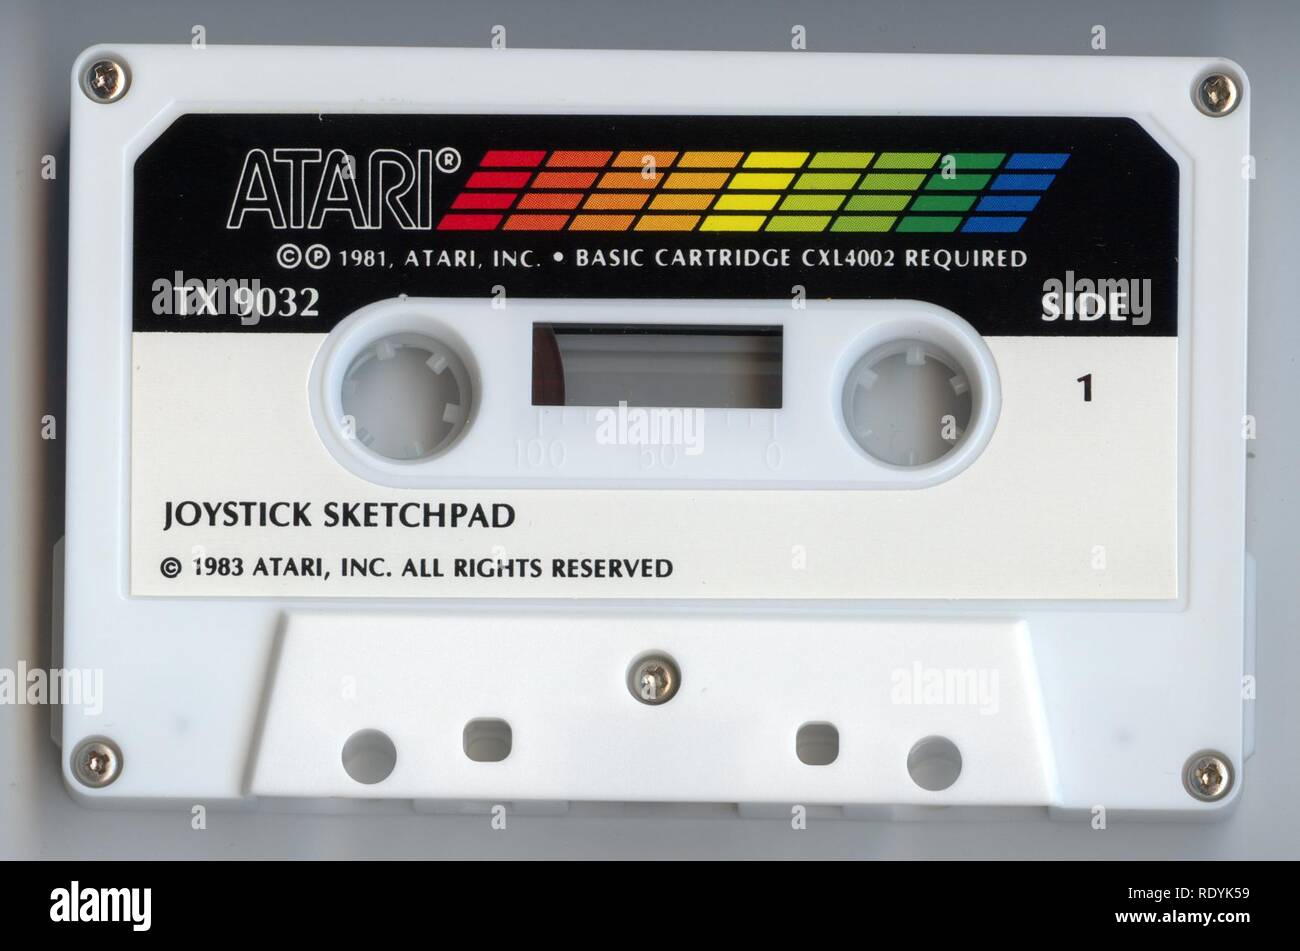 Atari Computer Program Cassette Joystick Sketchpad TX 9032. Stock Photo